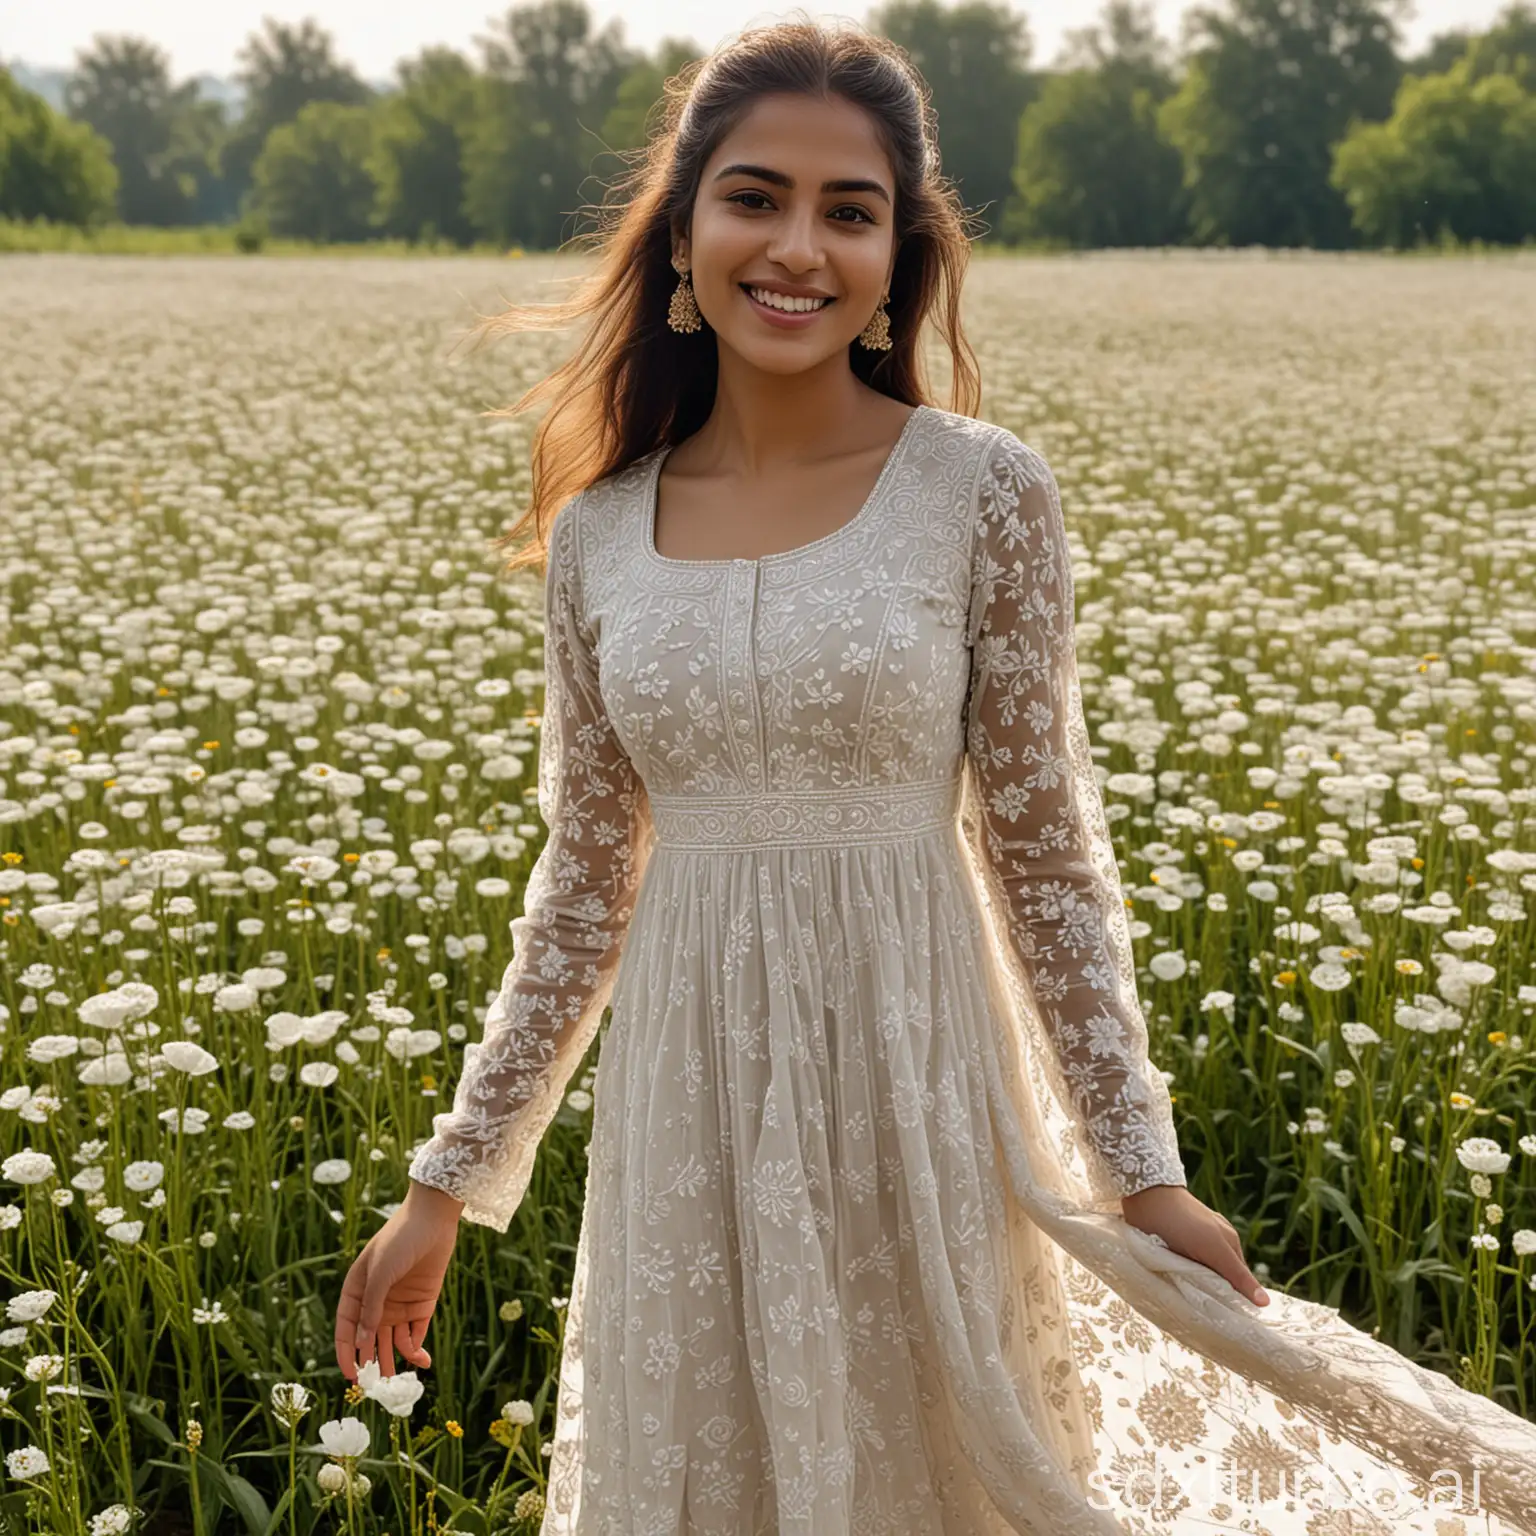 Smiling-Woman-in-Elegant-Chikankari-Gown-Amidst-Flower-Field